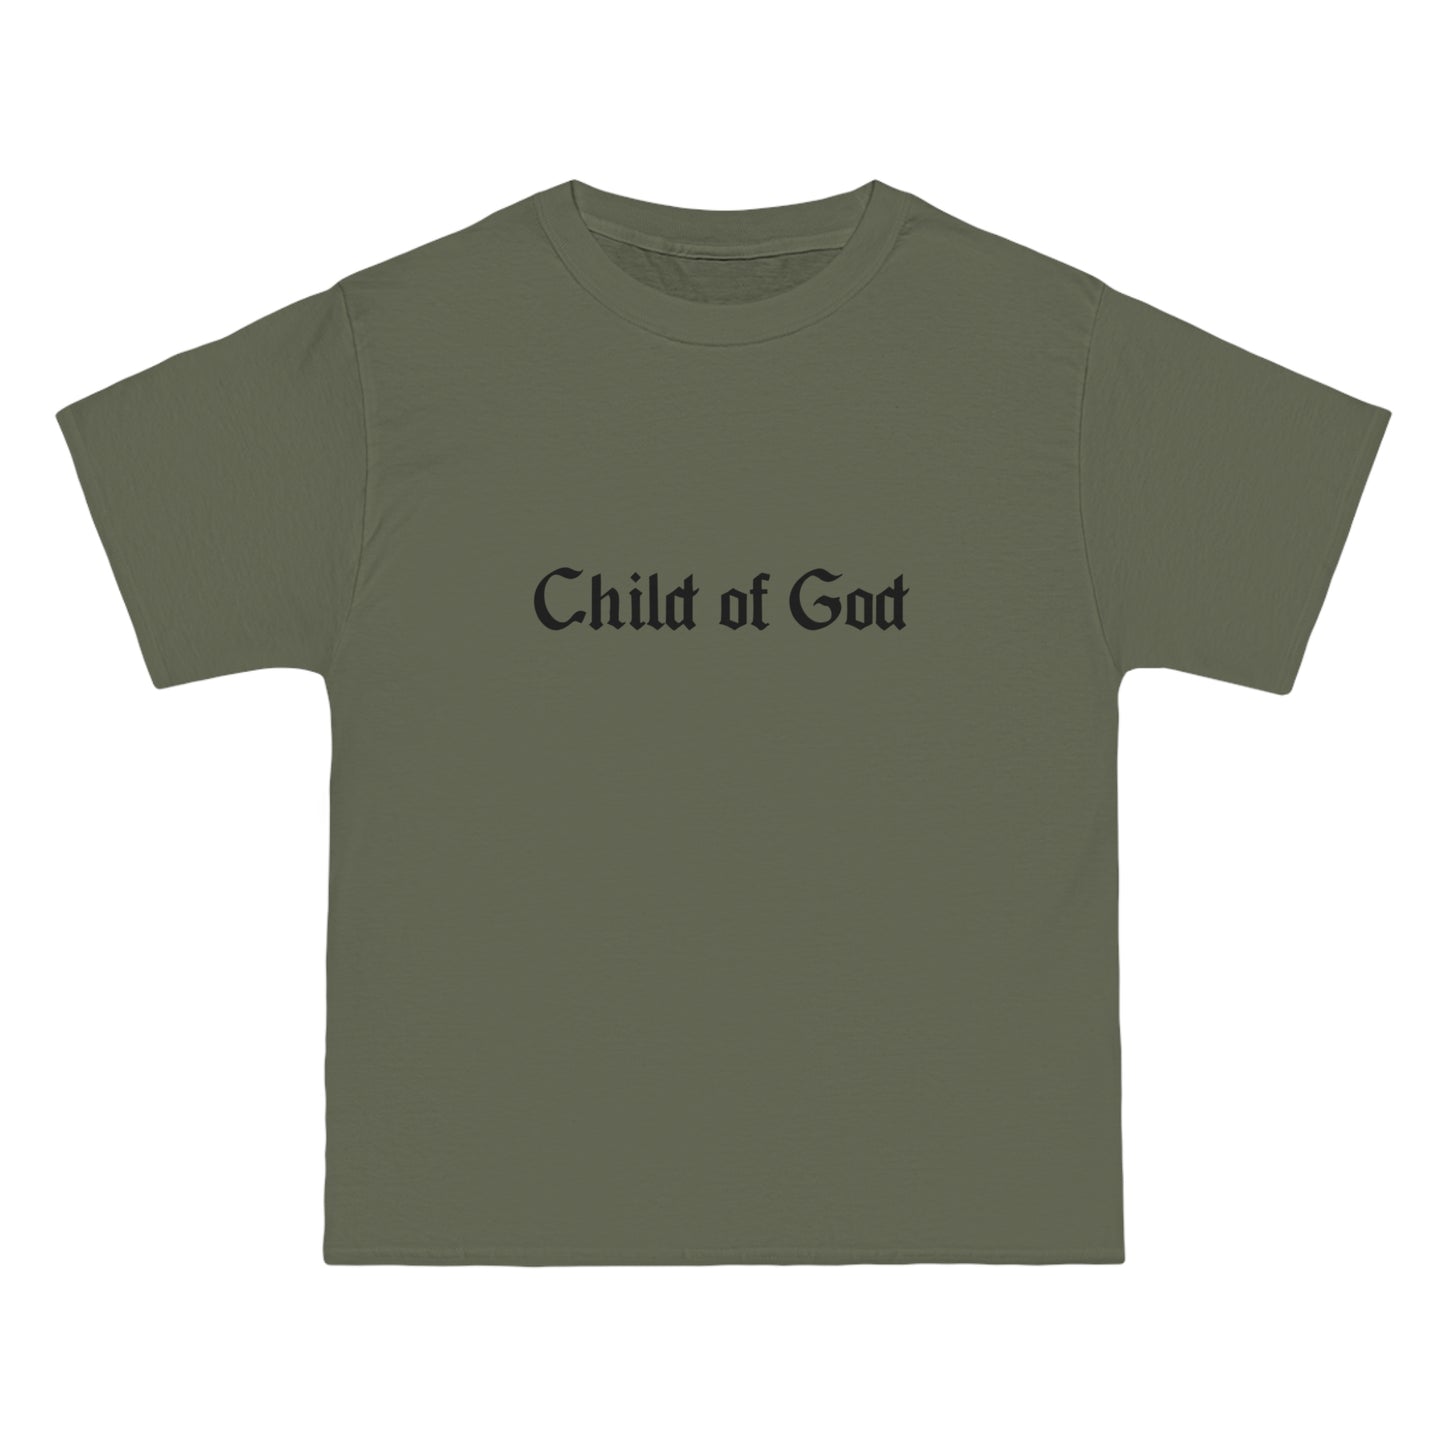 Child of God T-Shirt